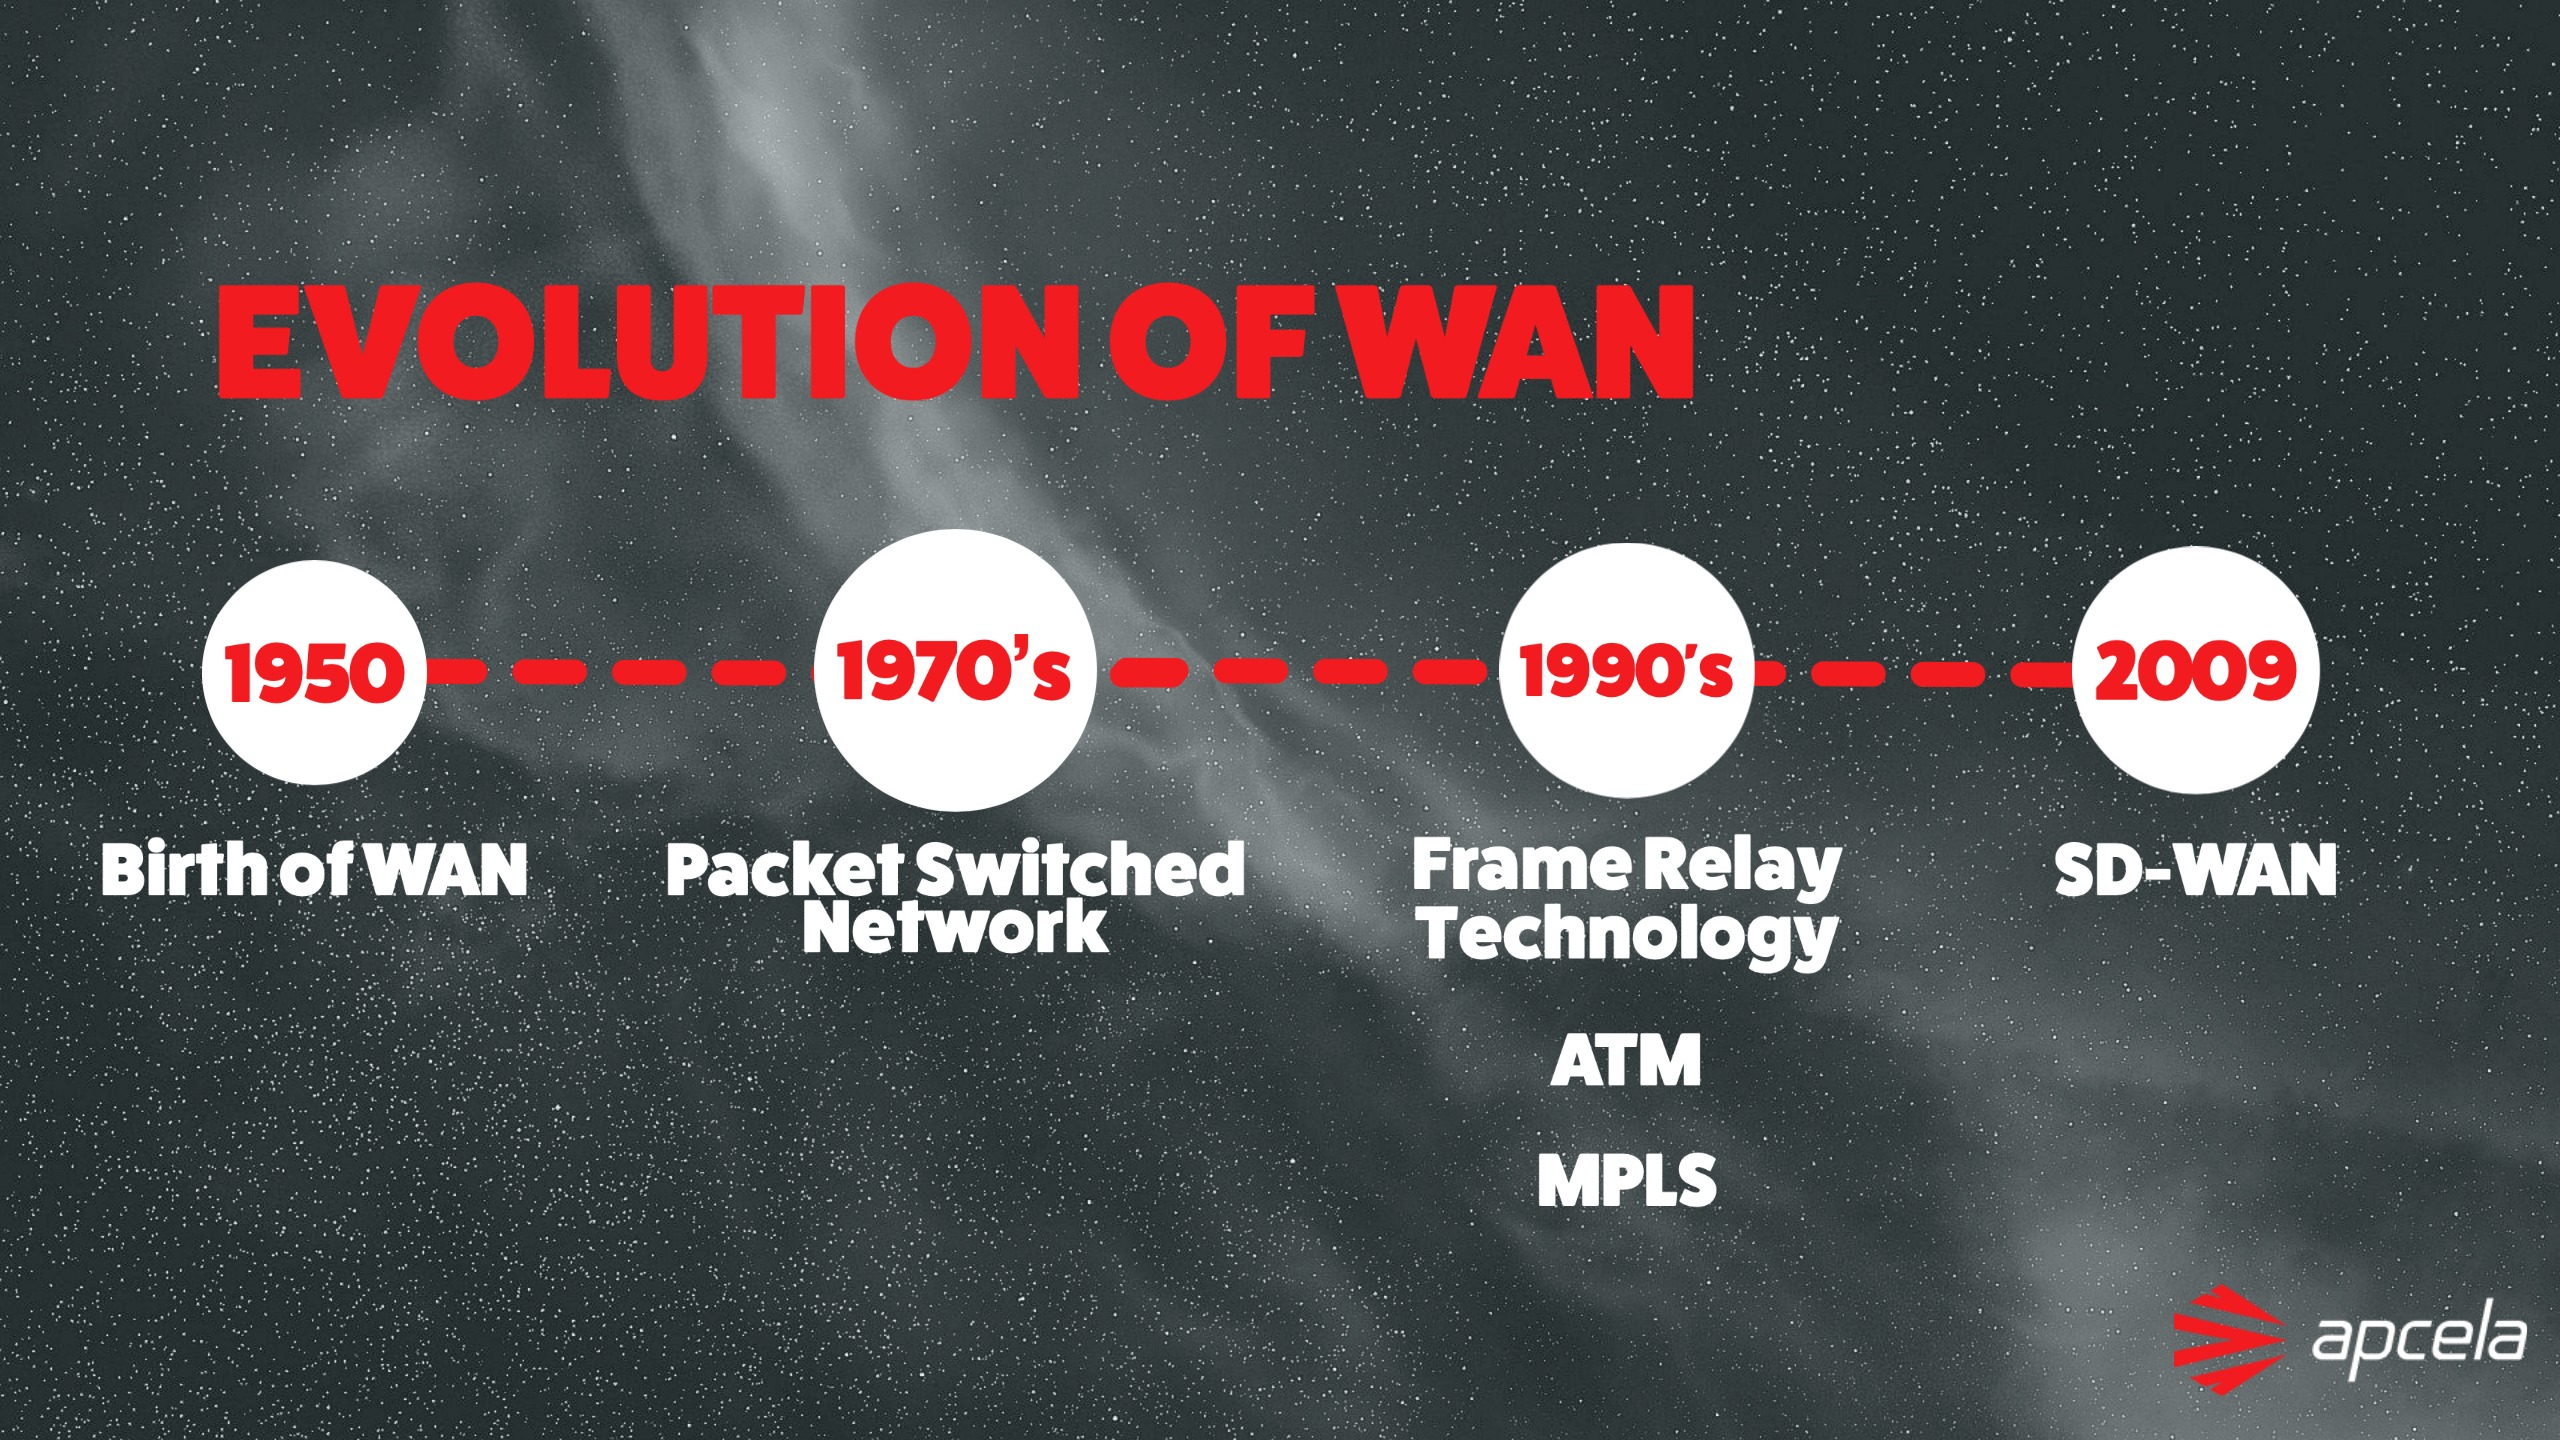 Timeline of the Evolution of WAN